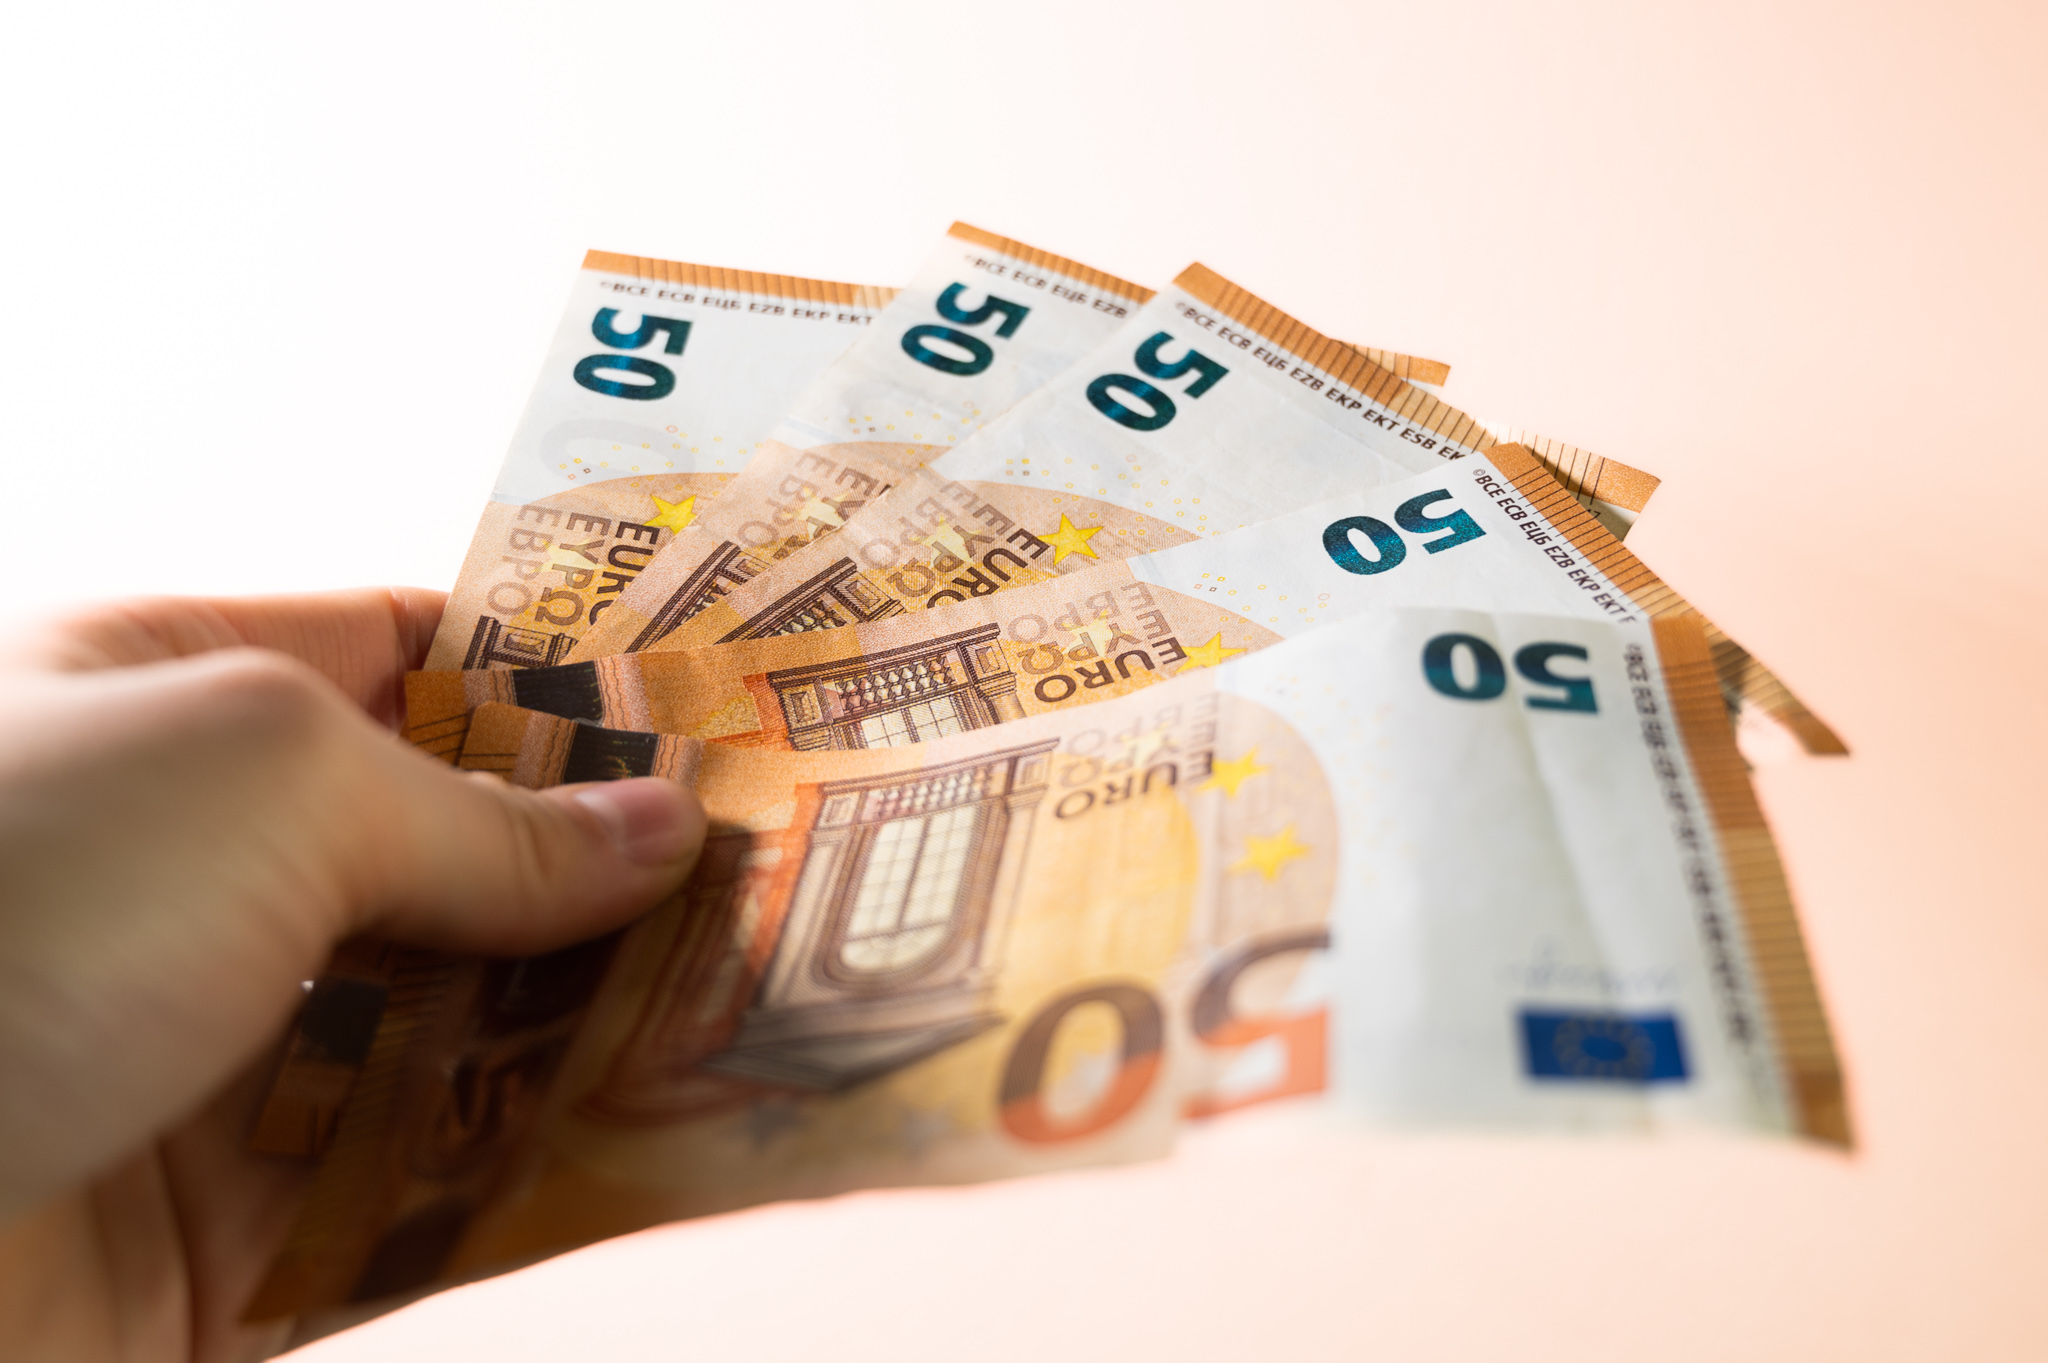 50-Euro-bills